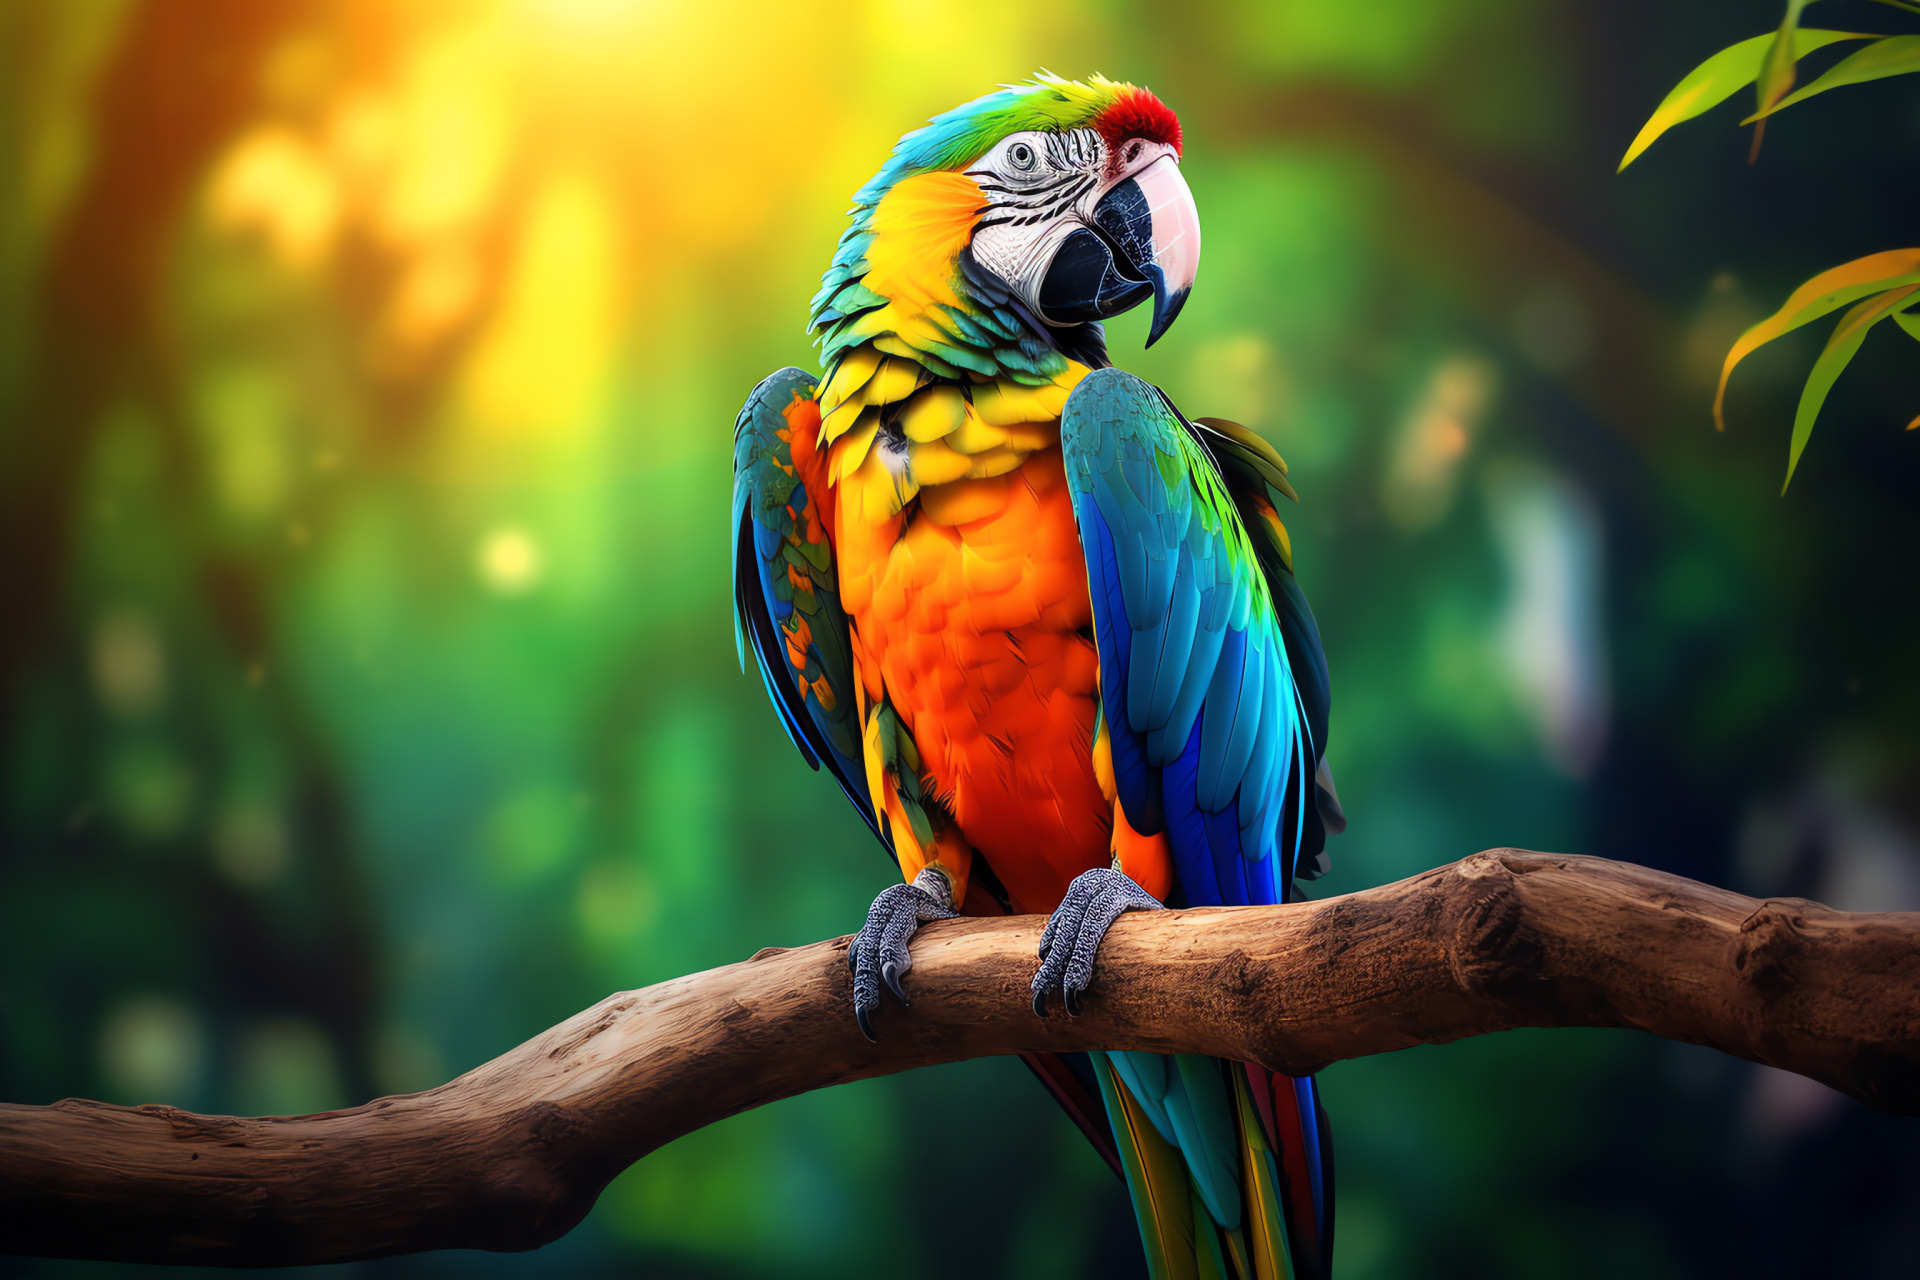 Parrot, Multicolor feather display, Avian branch rest, Captivating tri-color scene, Exotic bird, HD Desktop Image